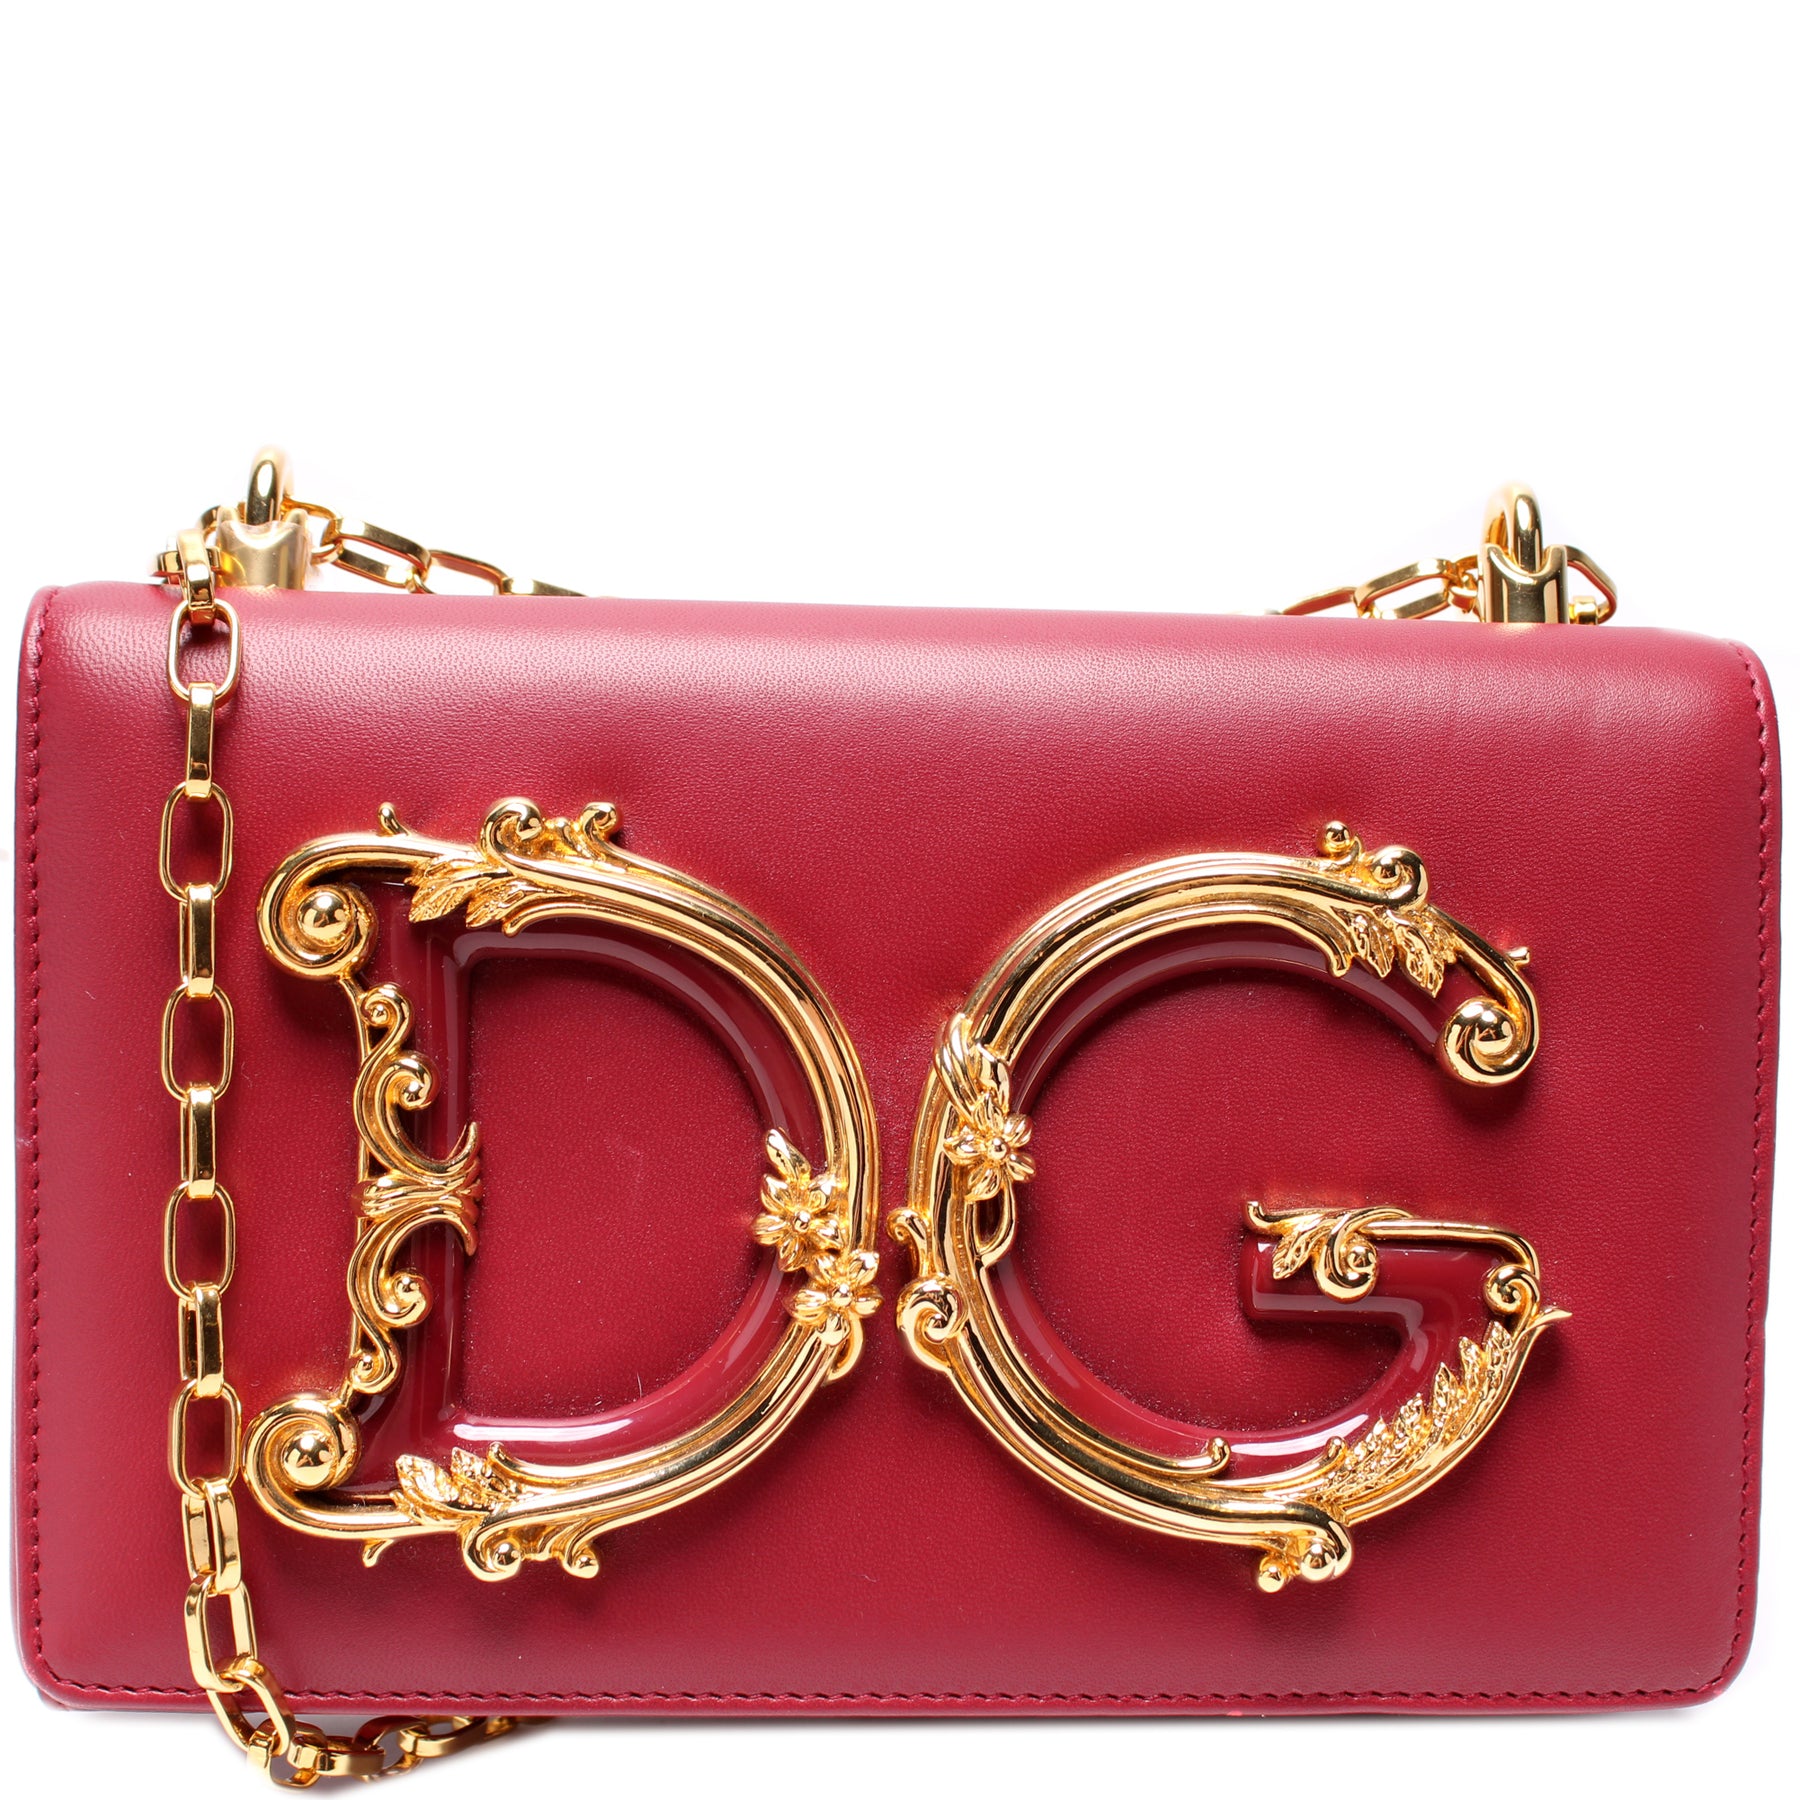 Women's Dg Girls Mini Bag by Dolce & Gabbana